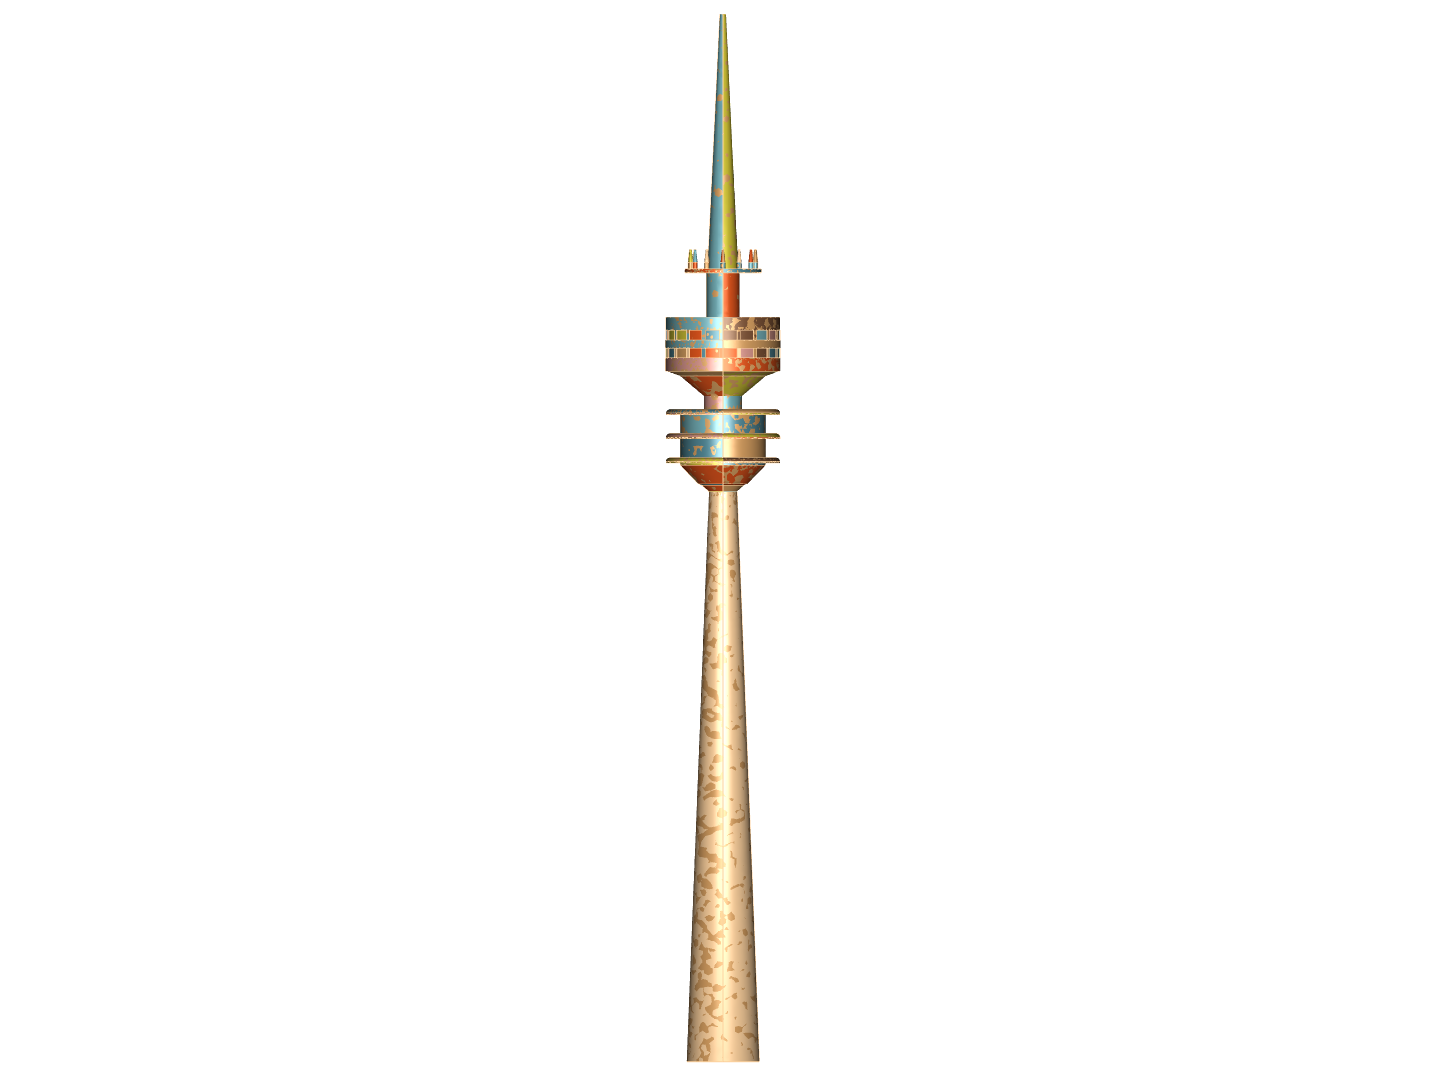 Olympia tower Munich- static and harmonic analysis image